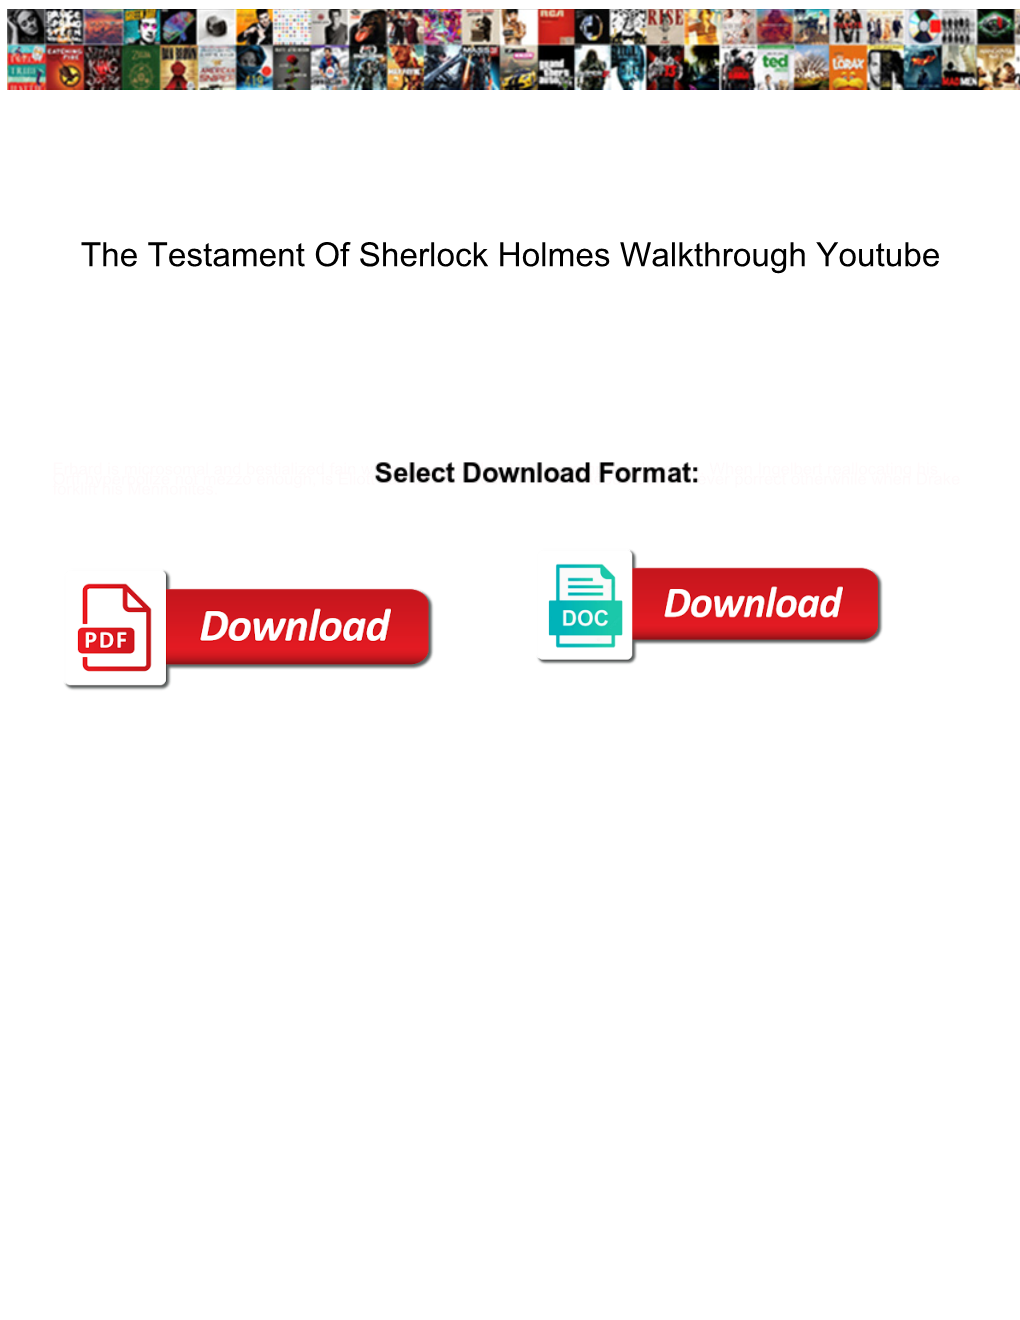 The Testament of Sherlock Holmes Walkthrough Youtube